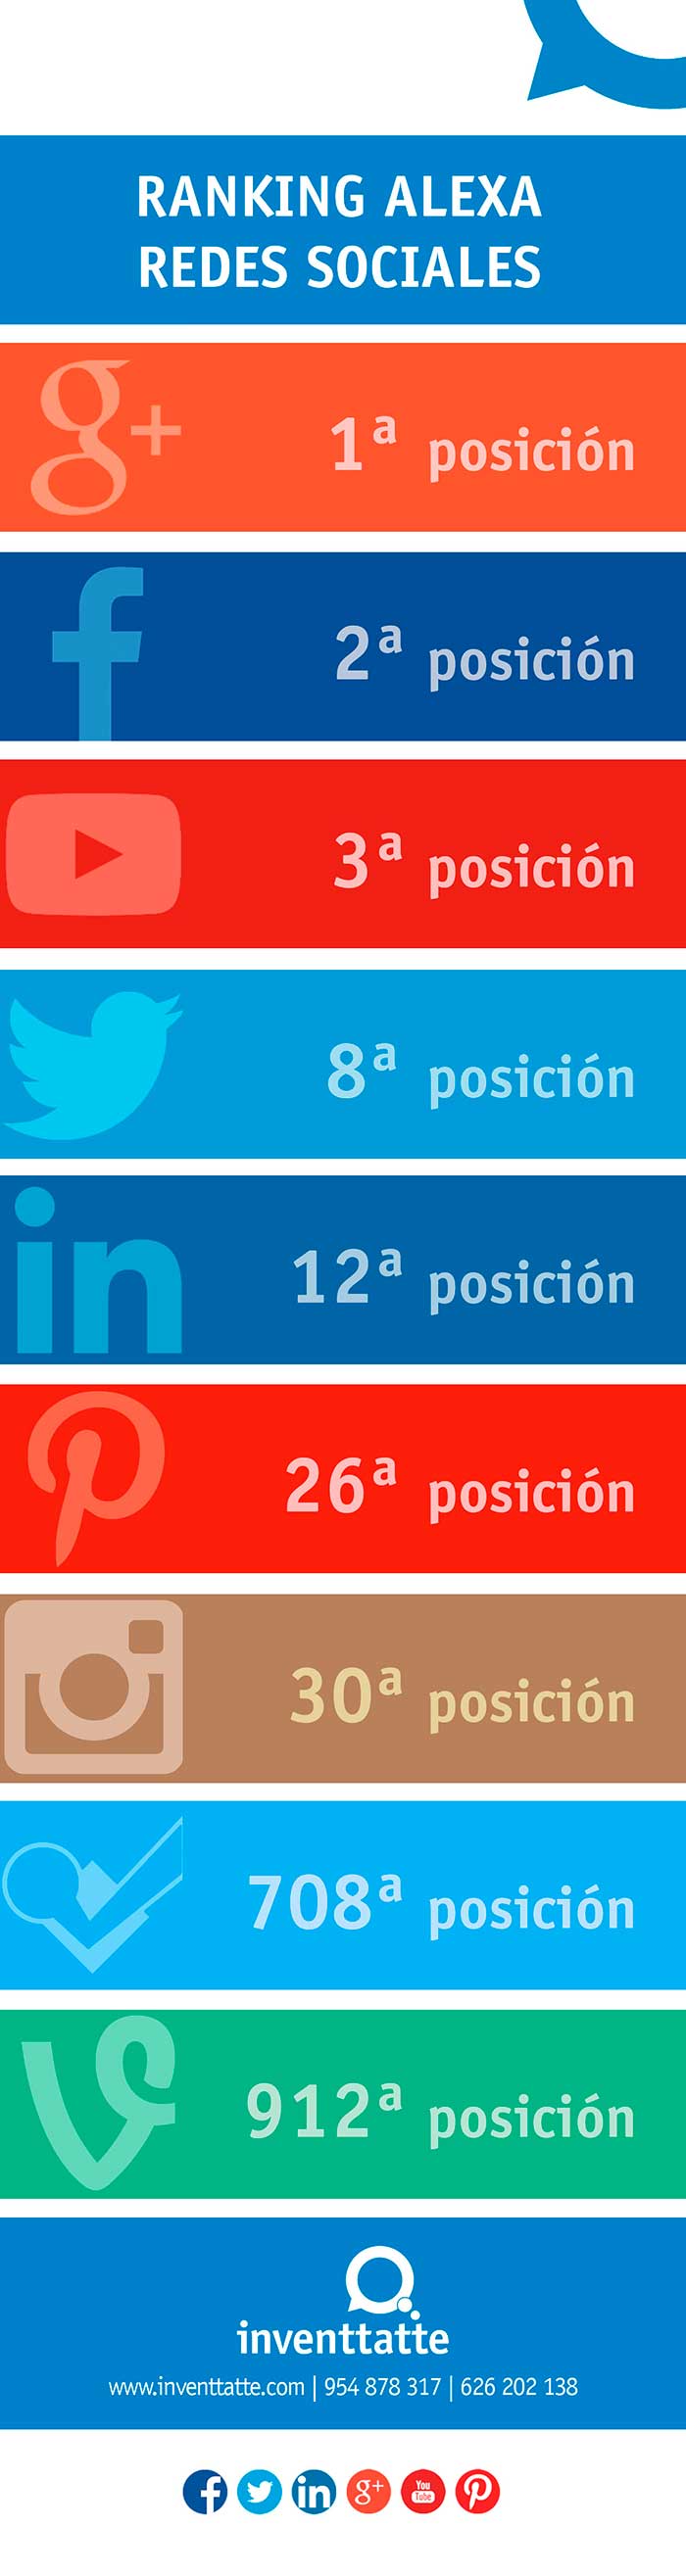 Infografia sobre las redes sociales en el ranking alexa